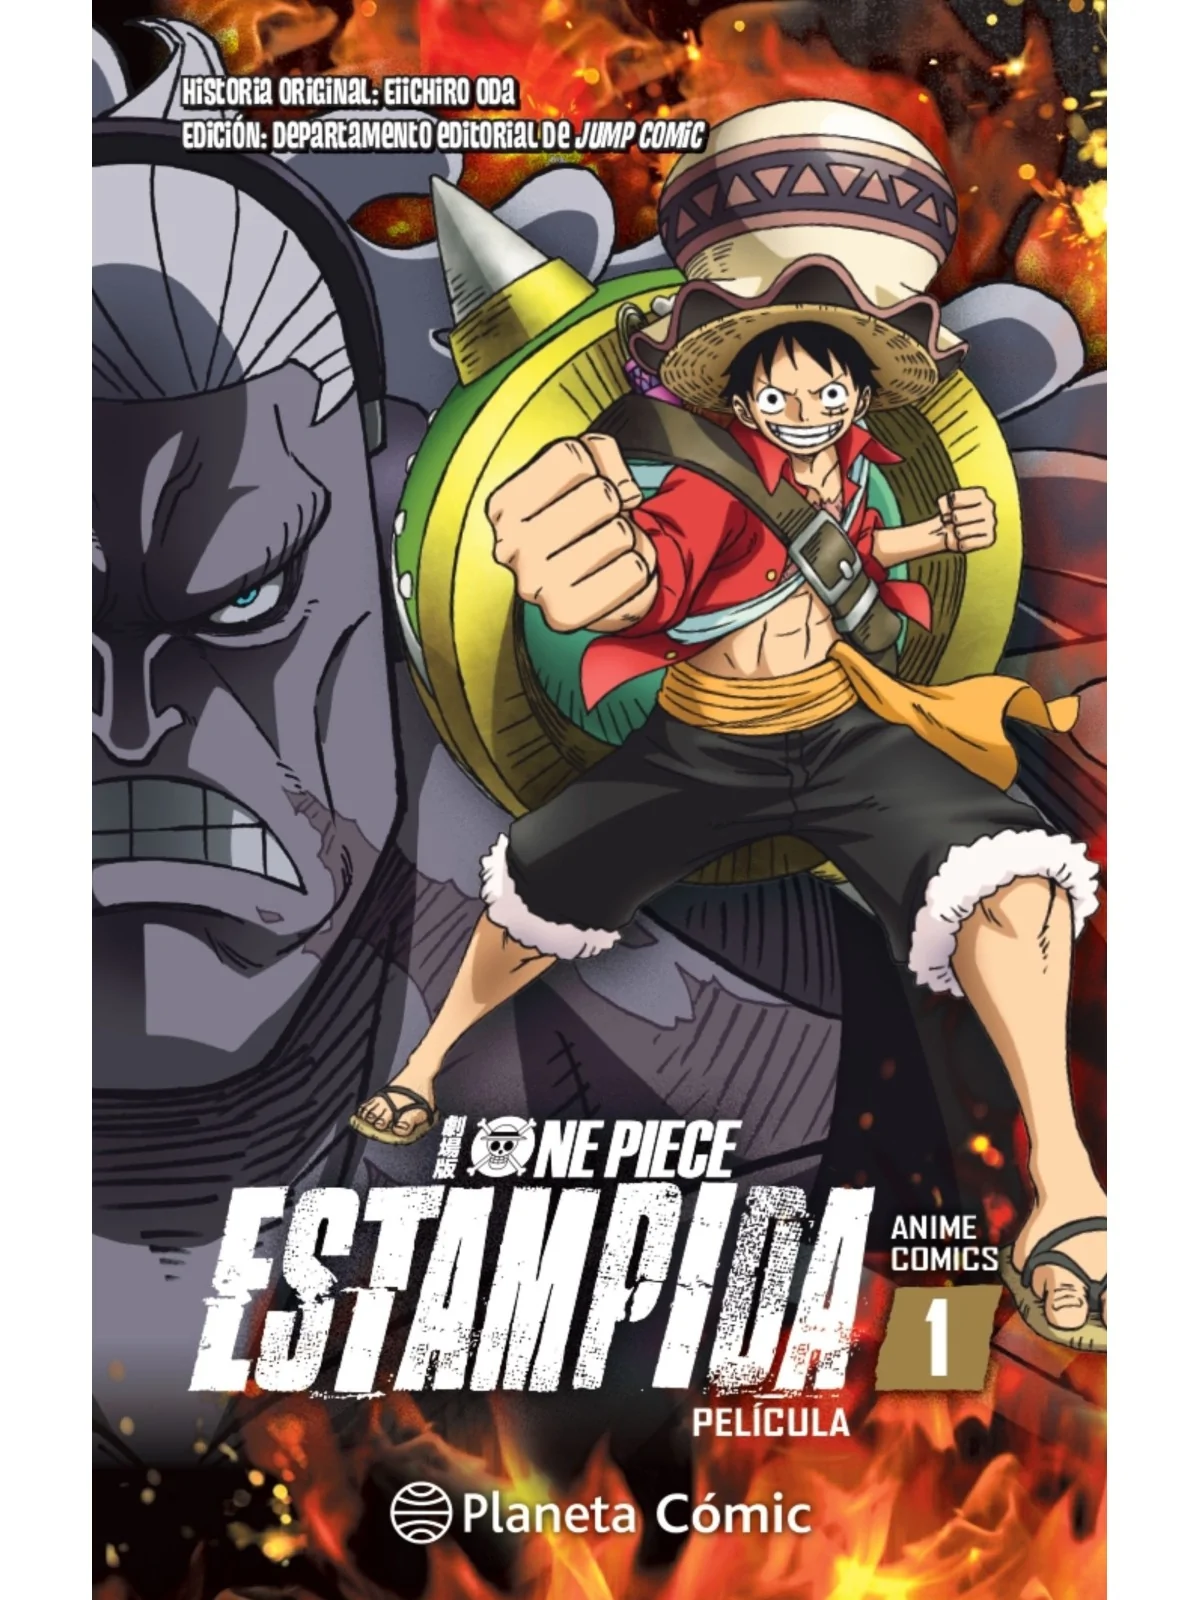 Comprar One Piece Estampida Anime Comic Nº 02/02 barato al mejor preci